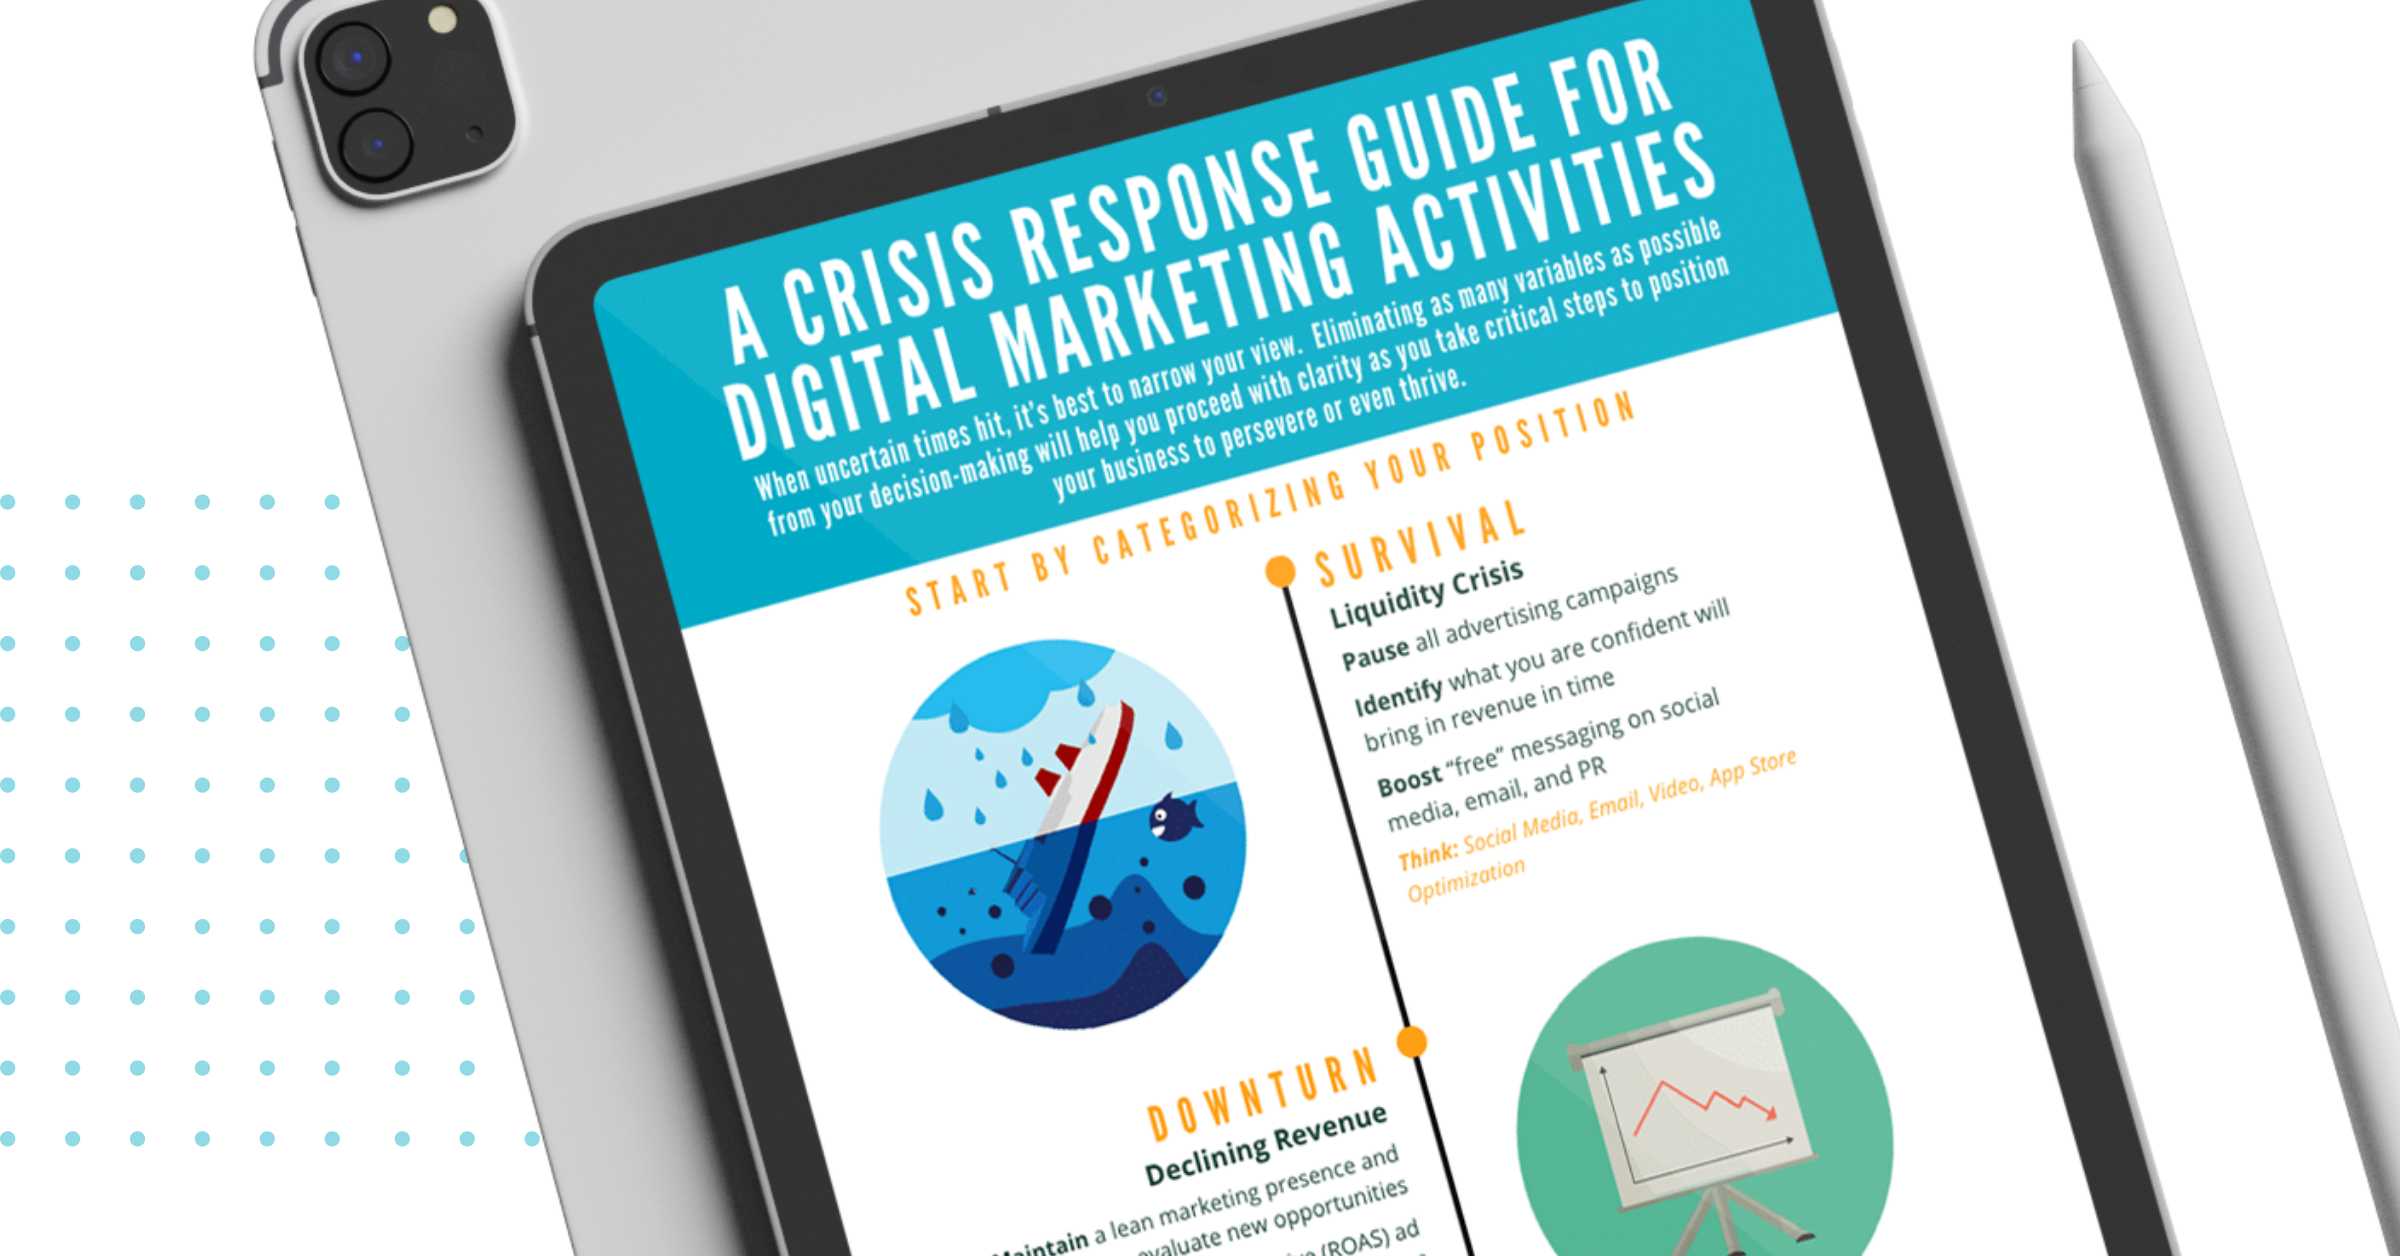 Crisis digital marketing | crisis response guide for digital marketing activities